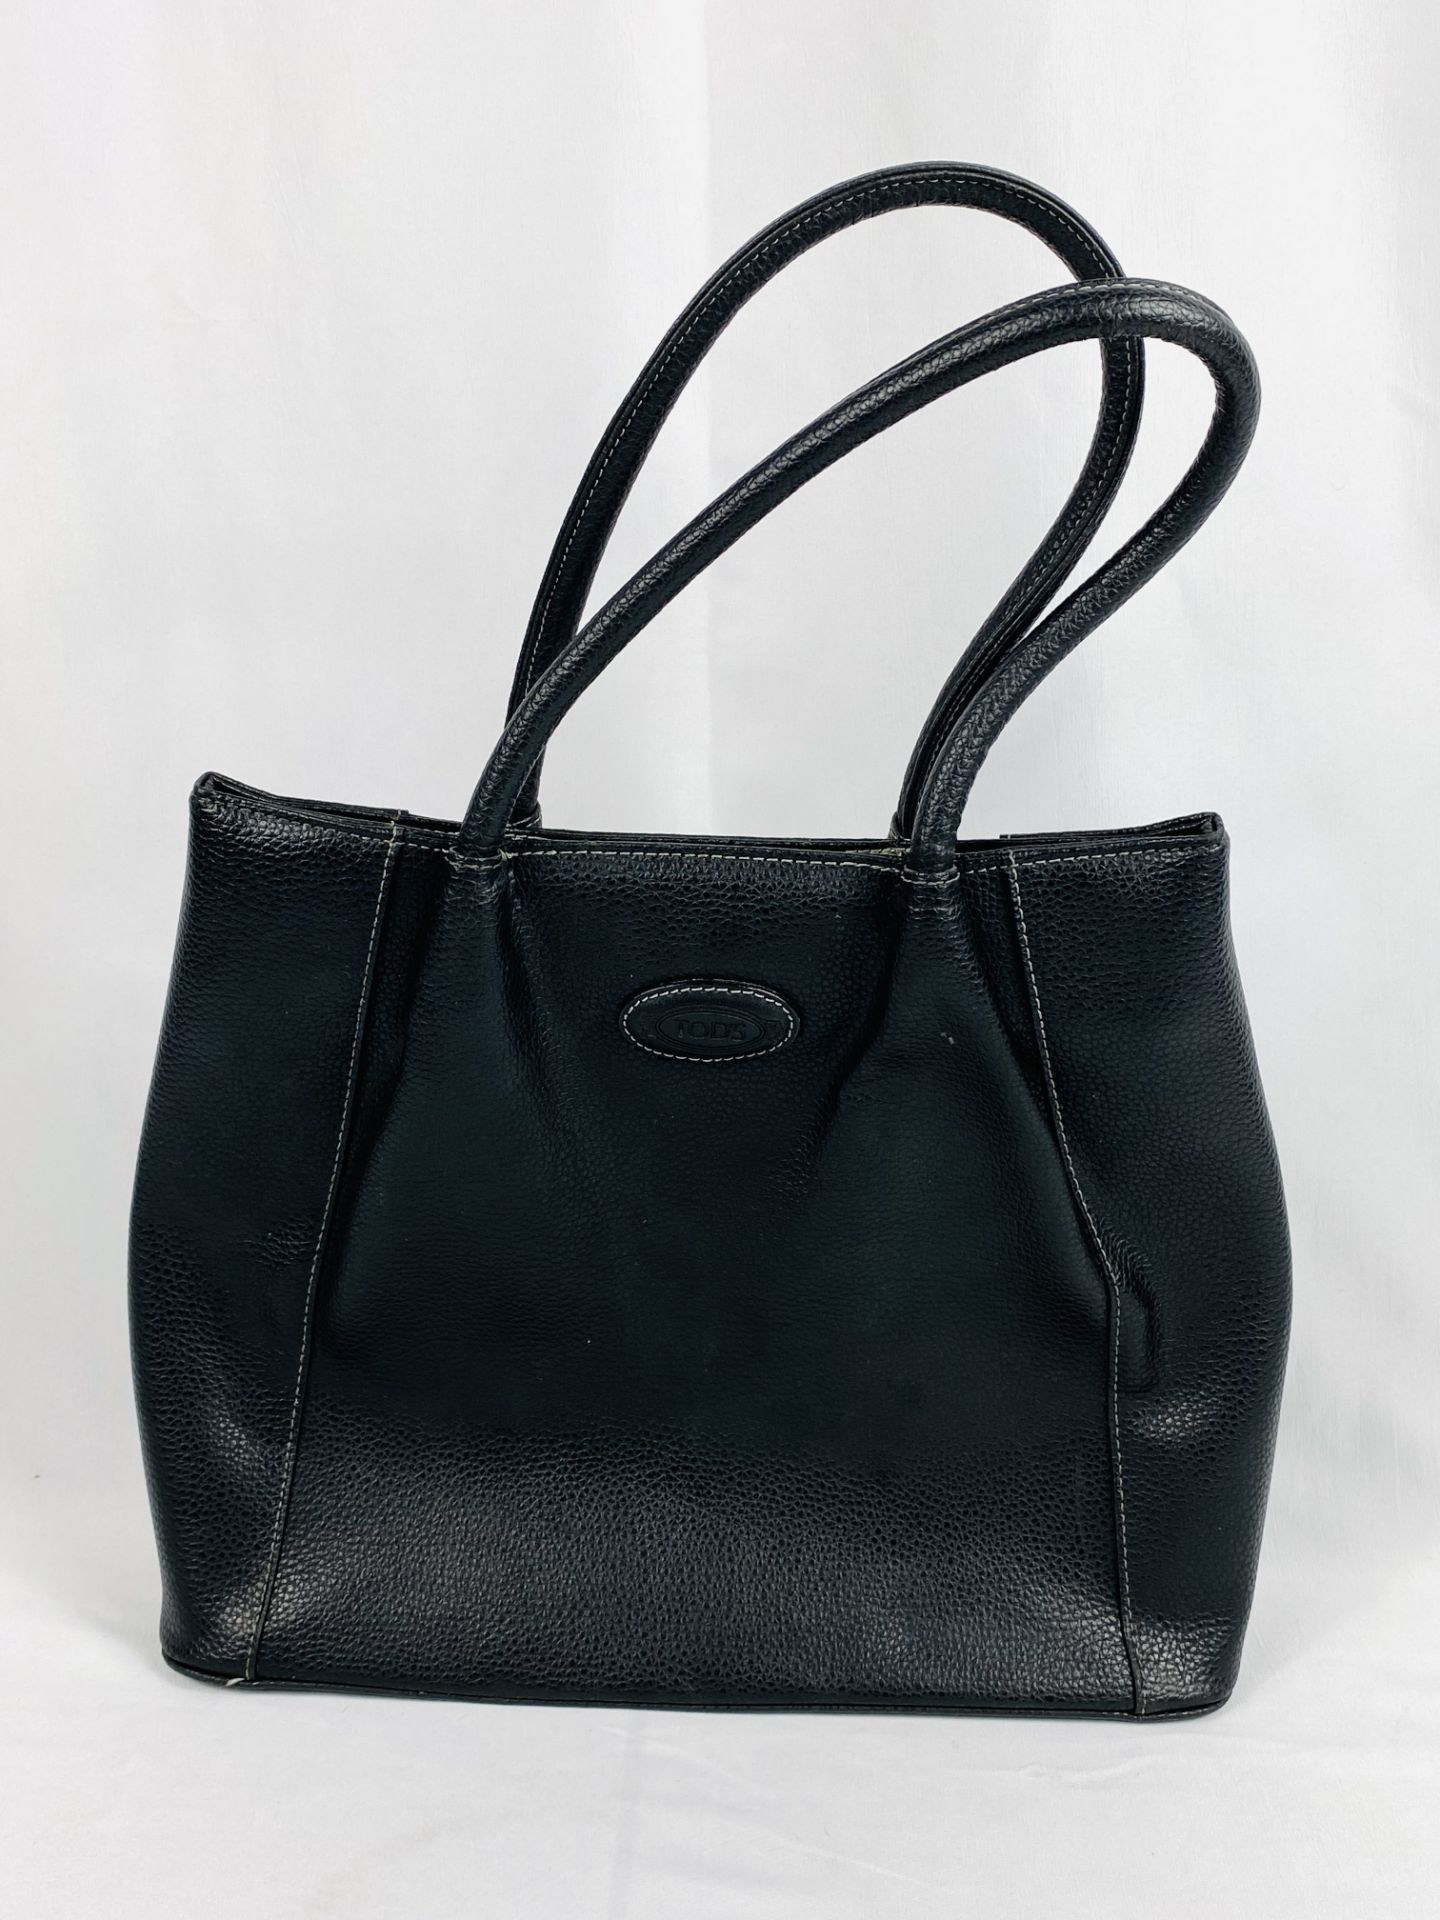 Tod's black leather shopper bag